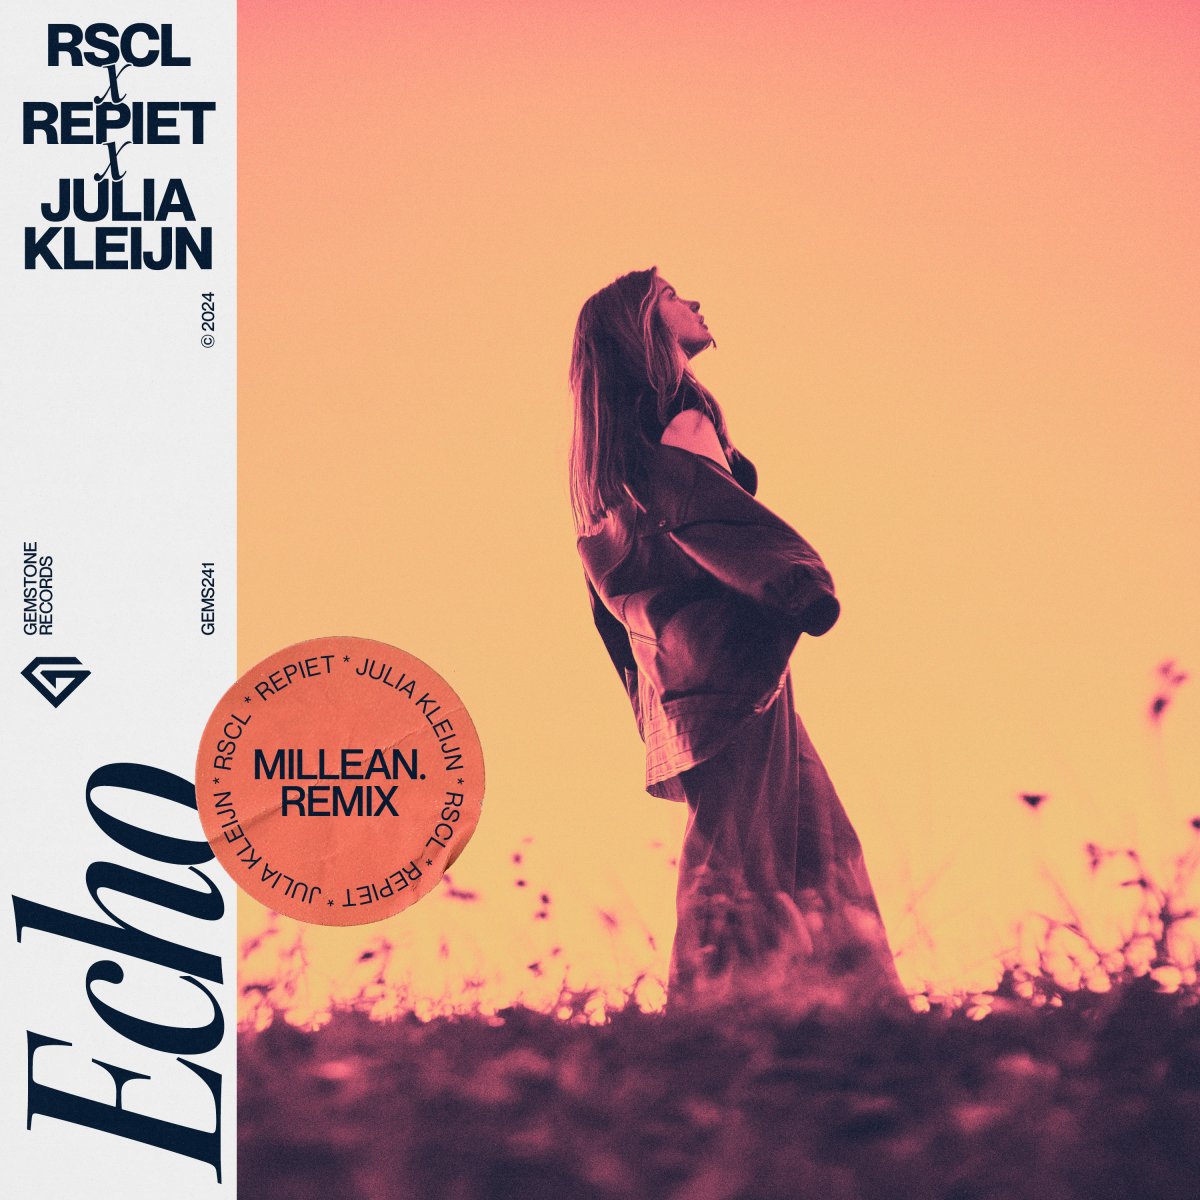 Echo (Millean. Remix) - RSCL⁠ x⁠ Repiet⁠ x Julia Kleijn⁠